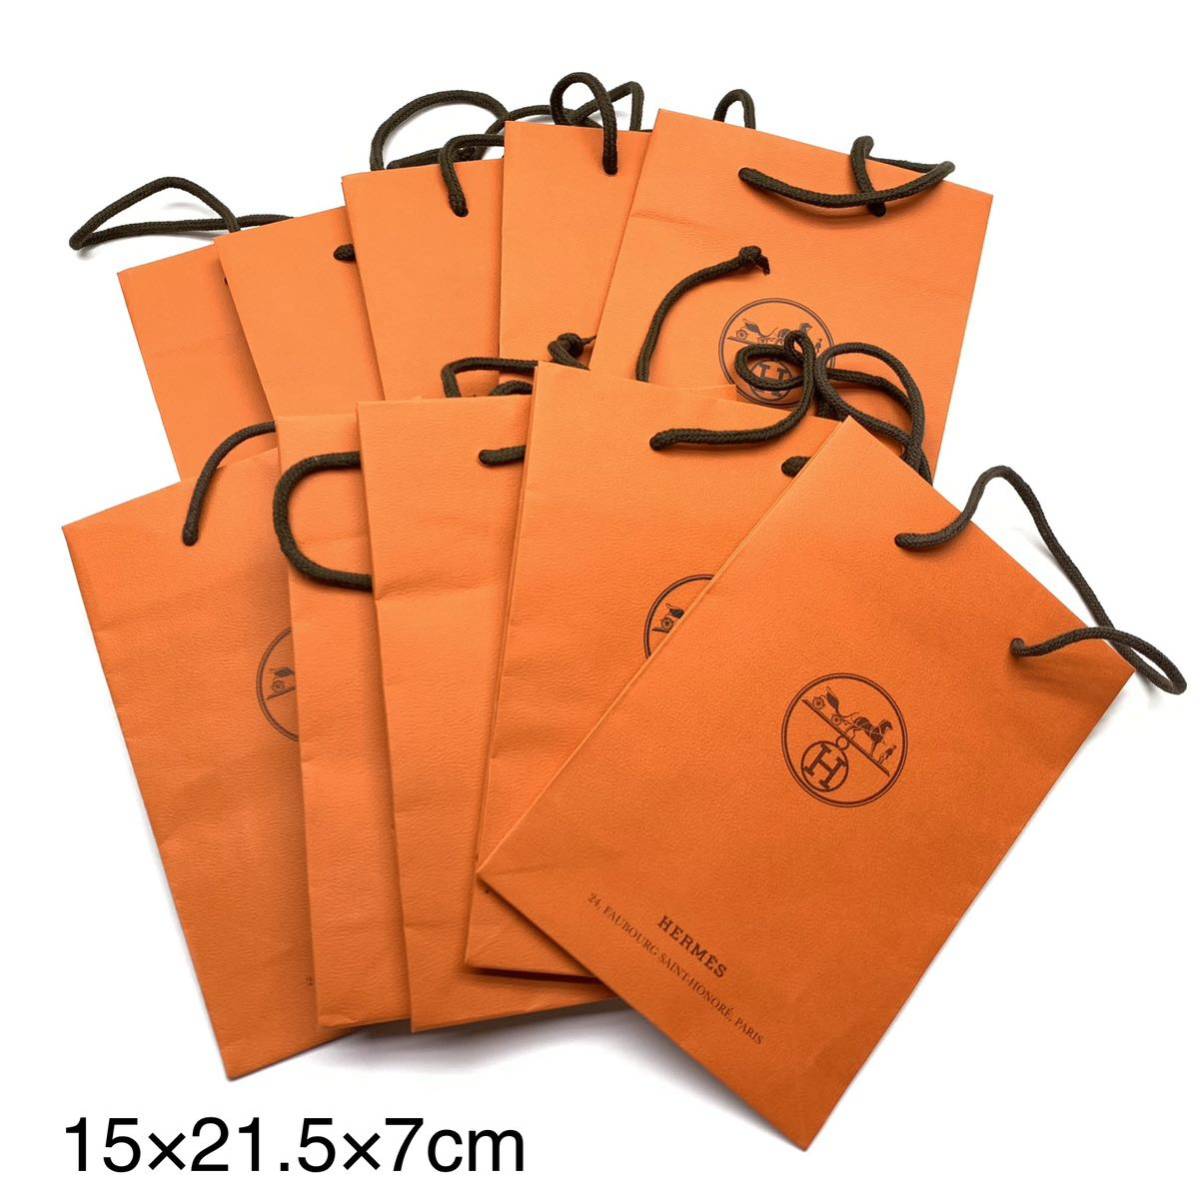 HERMES エルメス 紙袋 ショップ袋 ショッパー ブランド紙袋 オレンジ ラッピング 10枚セット 15×21.5×7cm 付属品 管理RY4_画像1